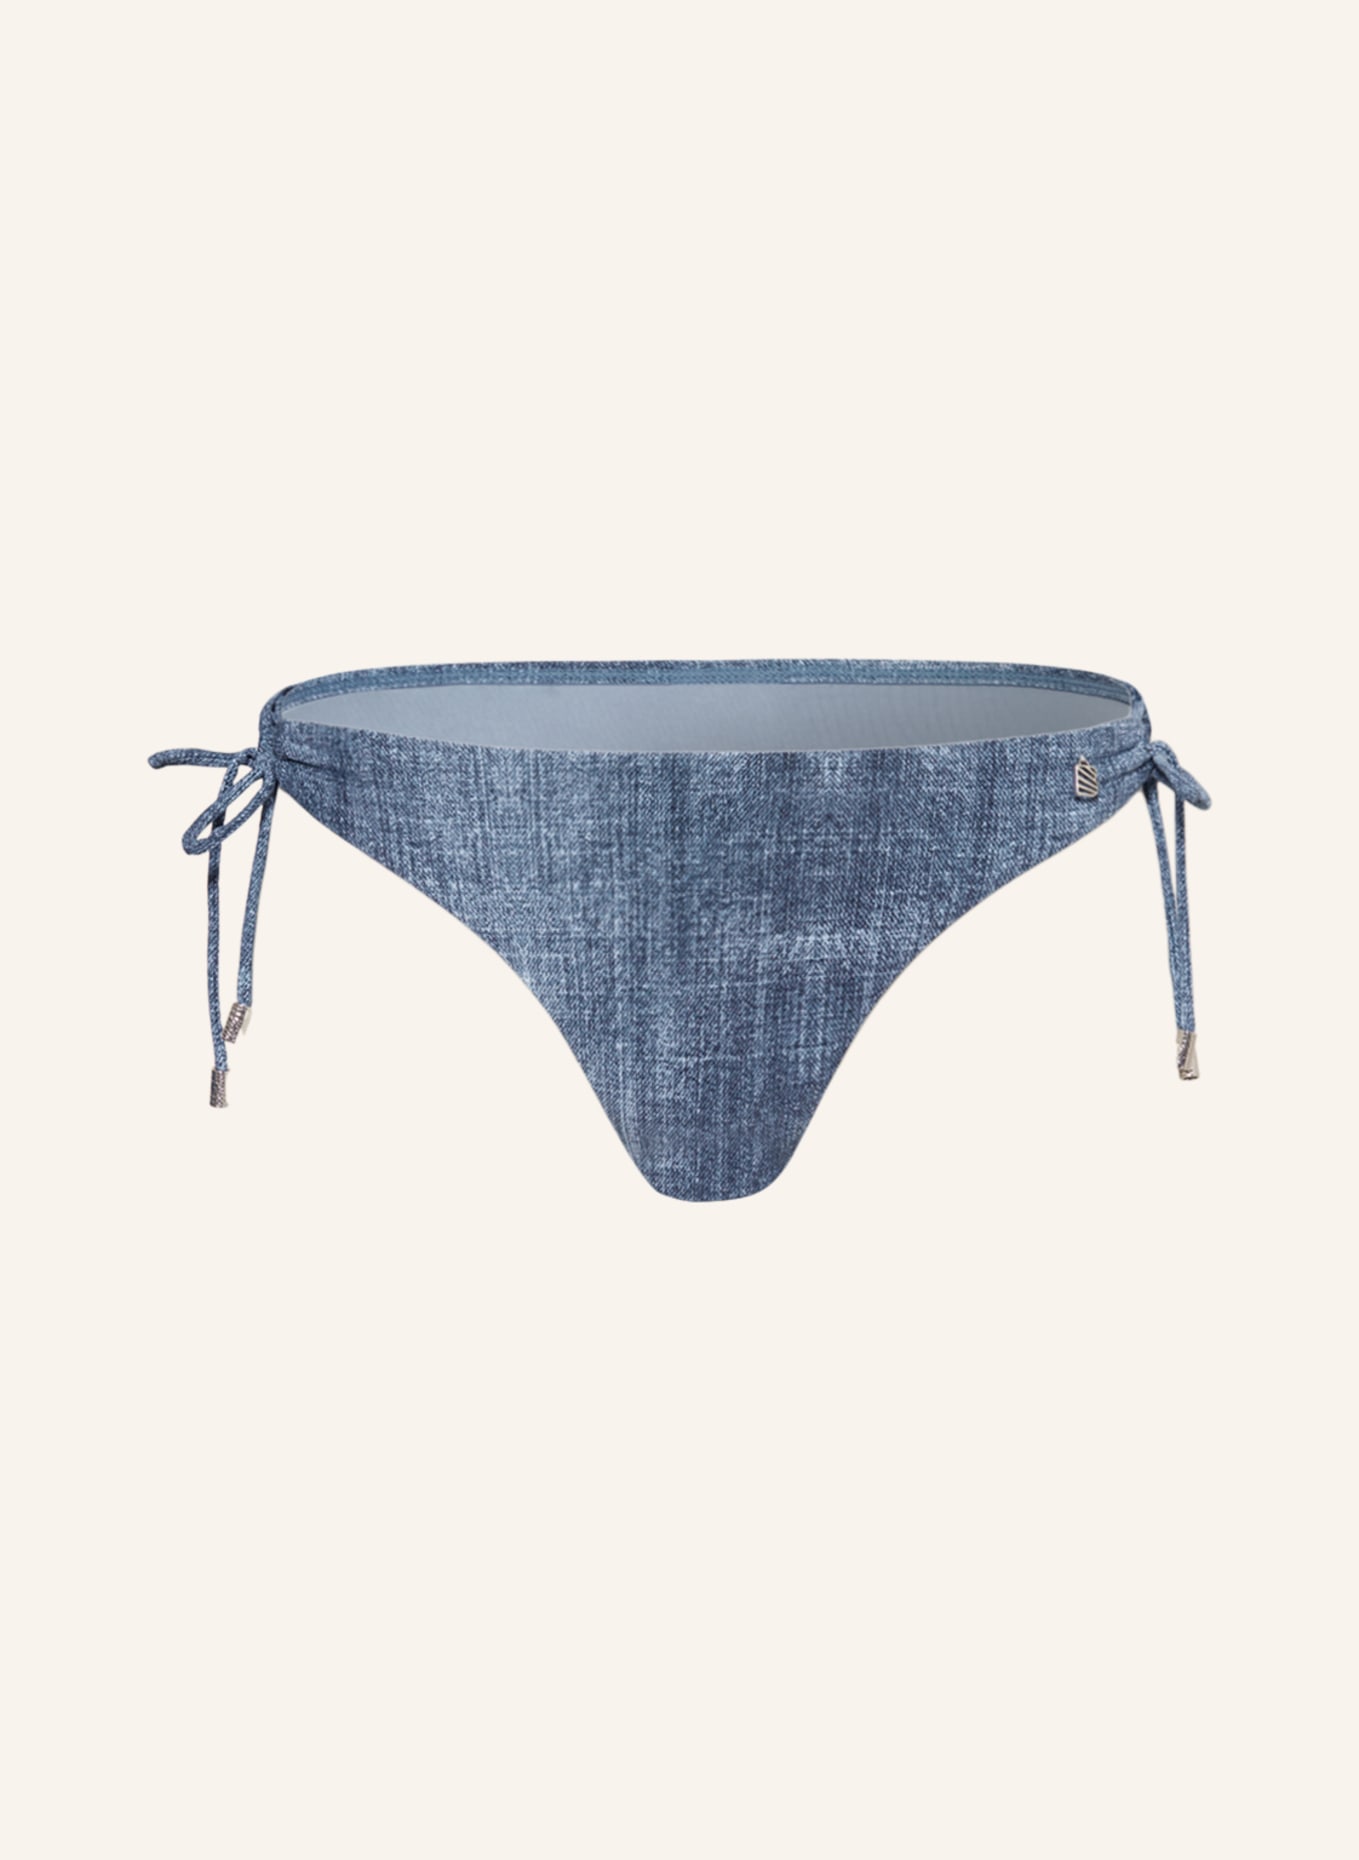 BEACHLIFE Triangel-Bikini-Hose DENIM, Farbe: BLAU (Bild 1)